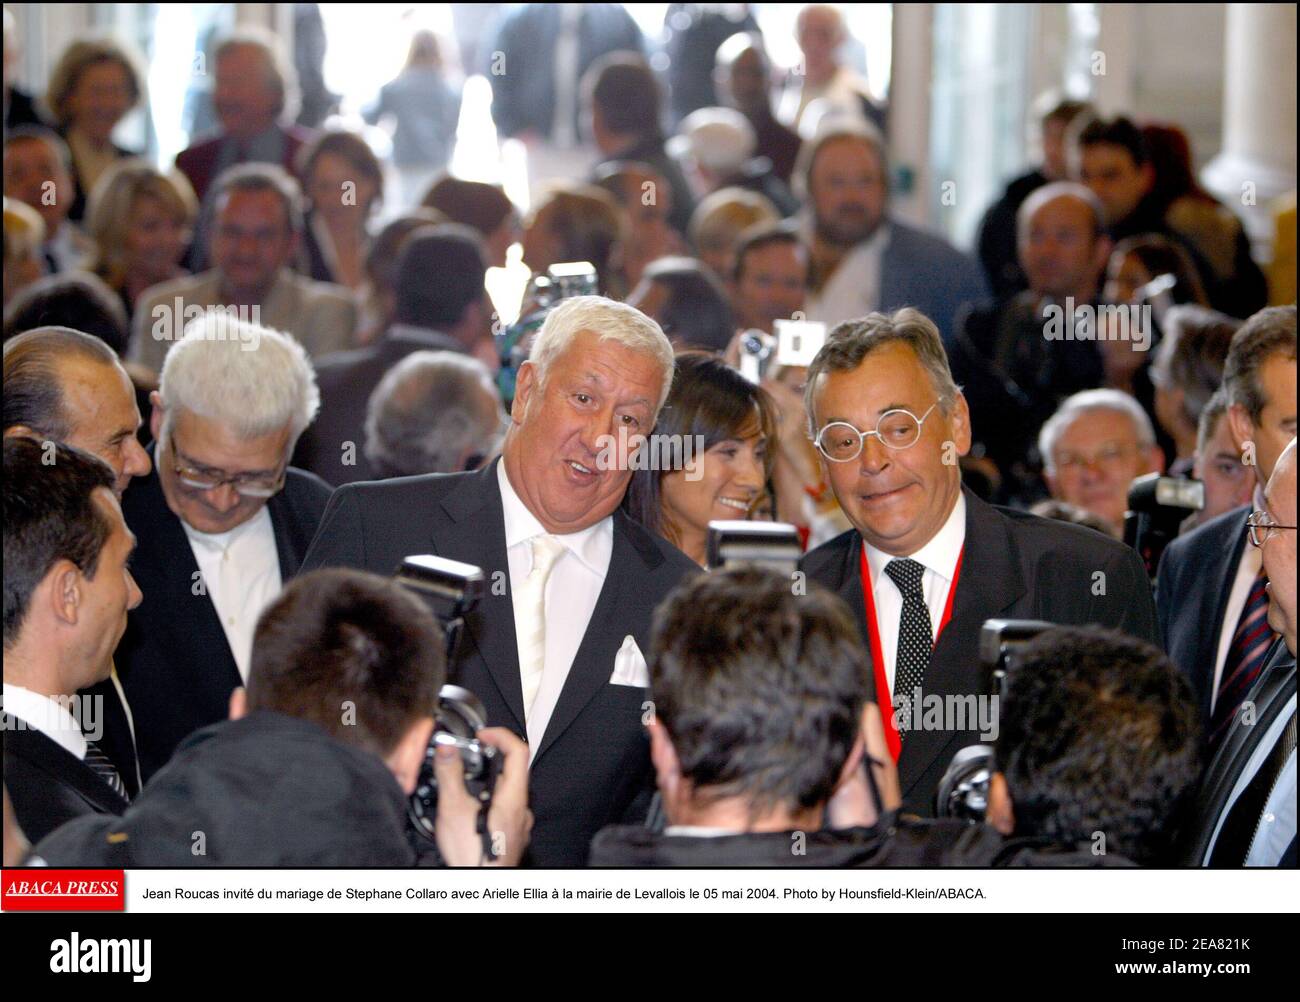 Jean Roucas invit du mariage de Stephane Collaro avec Arielle Ellia ˆ la mairie de Levallois le 05 mai 2004. Photo by Hounsfield-Klein/ABACA. Stock Photo